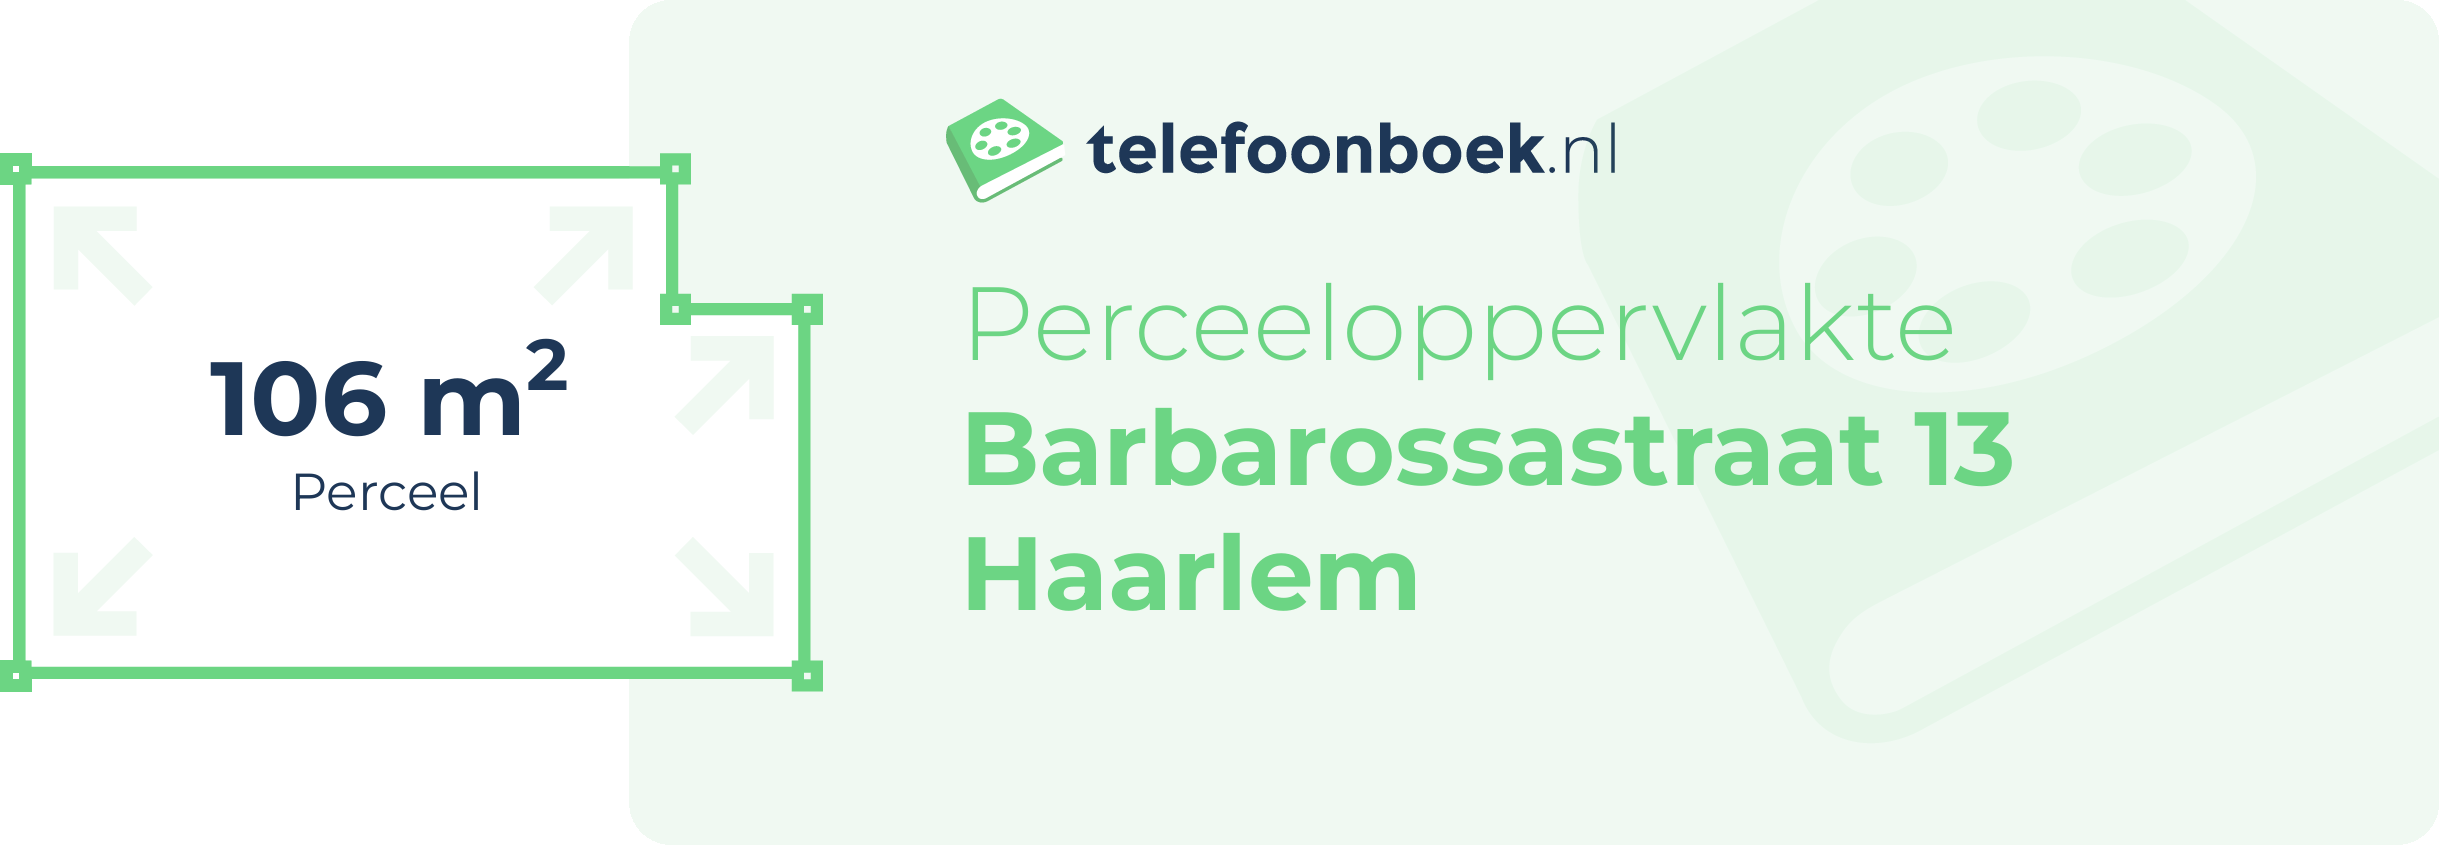 Perceeloppervlakte Barbarossastraat 13 Haarlem